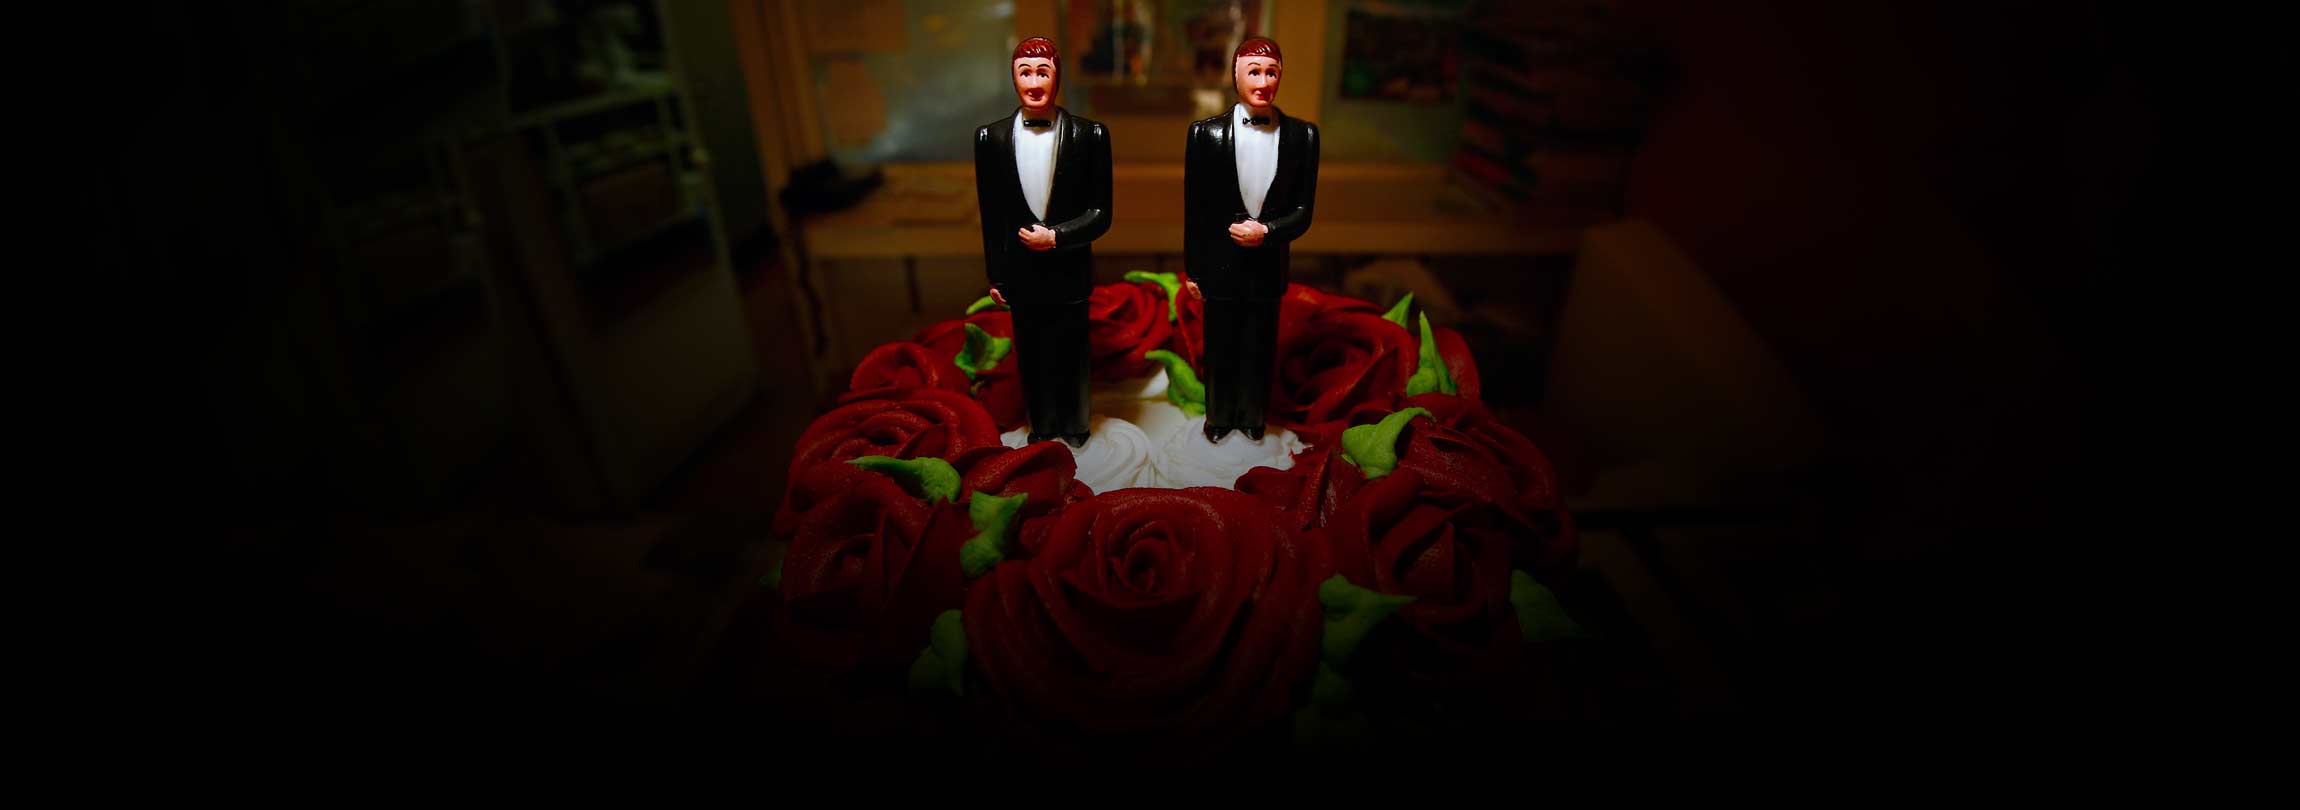 O que o Canadá tem a nos ensinar sobre o “casamento” homossexual?